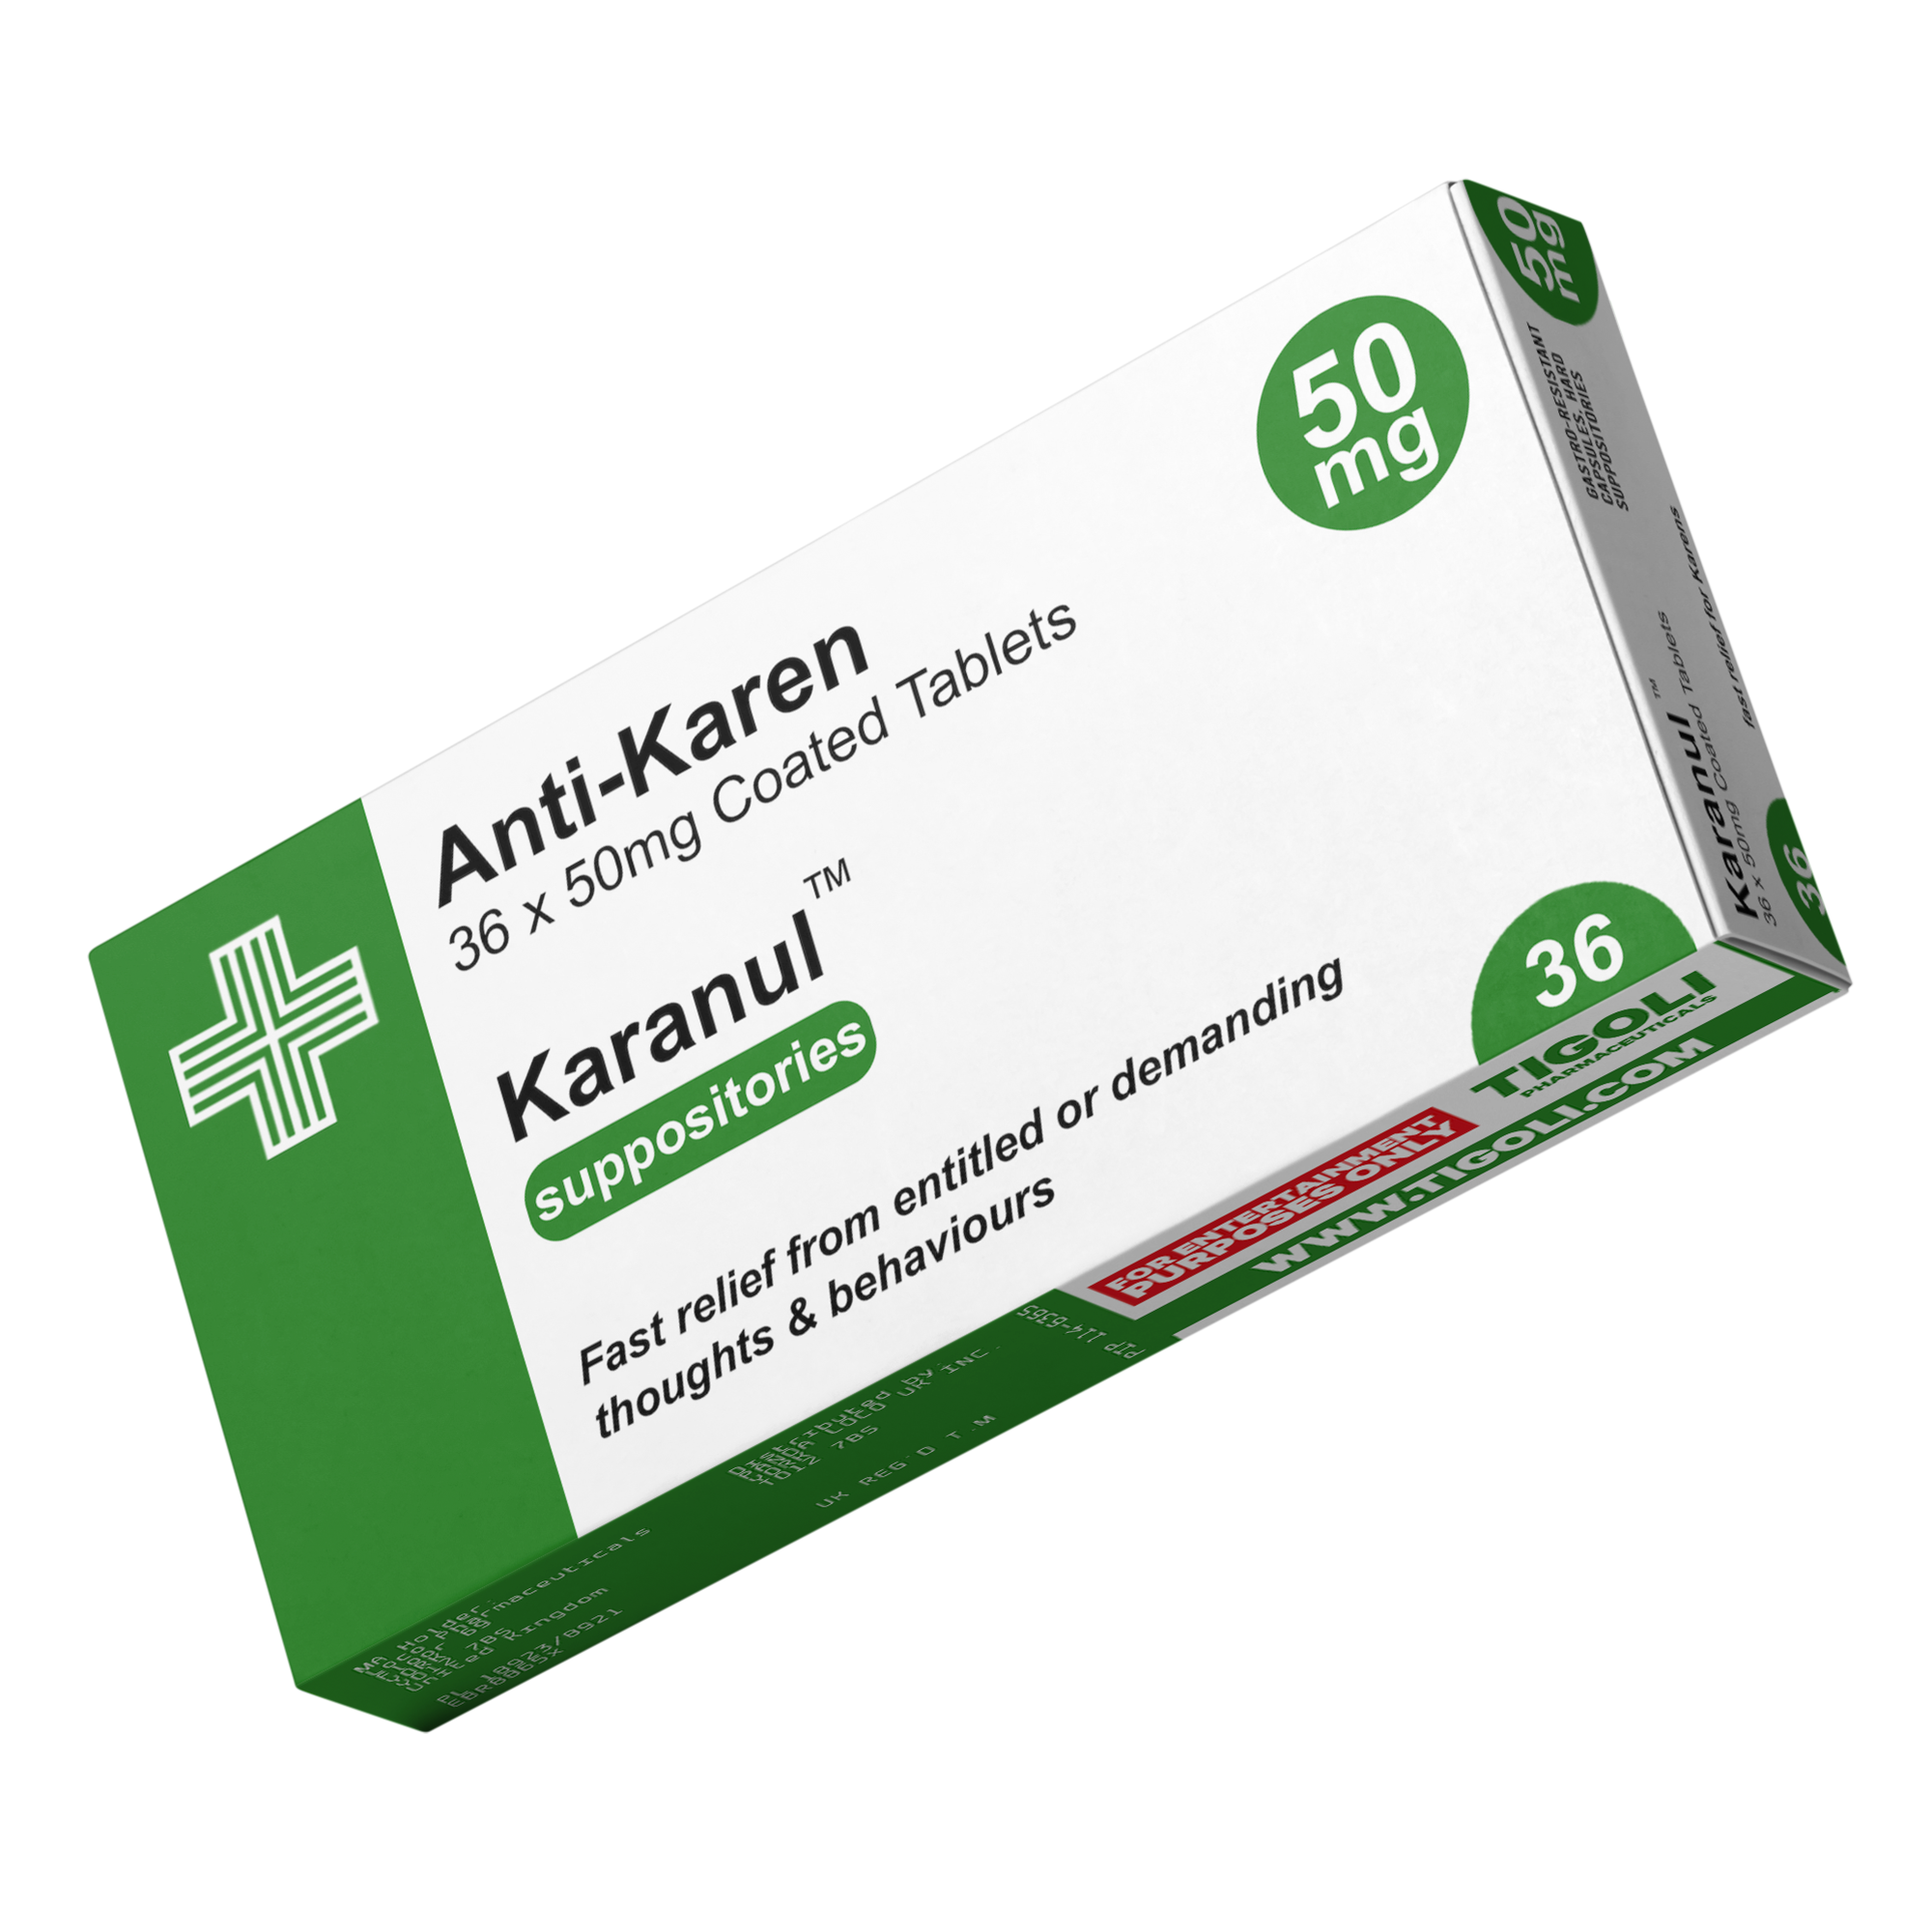 Anti-Karen (Karanul) Pill Medication Box Realistic Prescription Joke Gag Funny + Free Prescription Bag